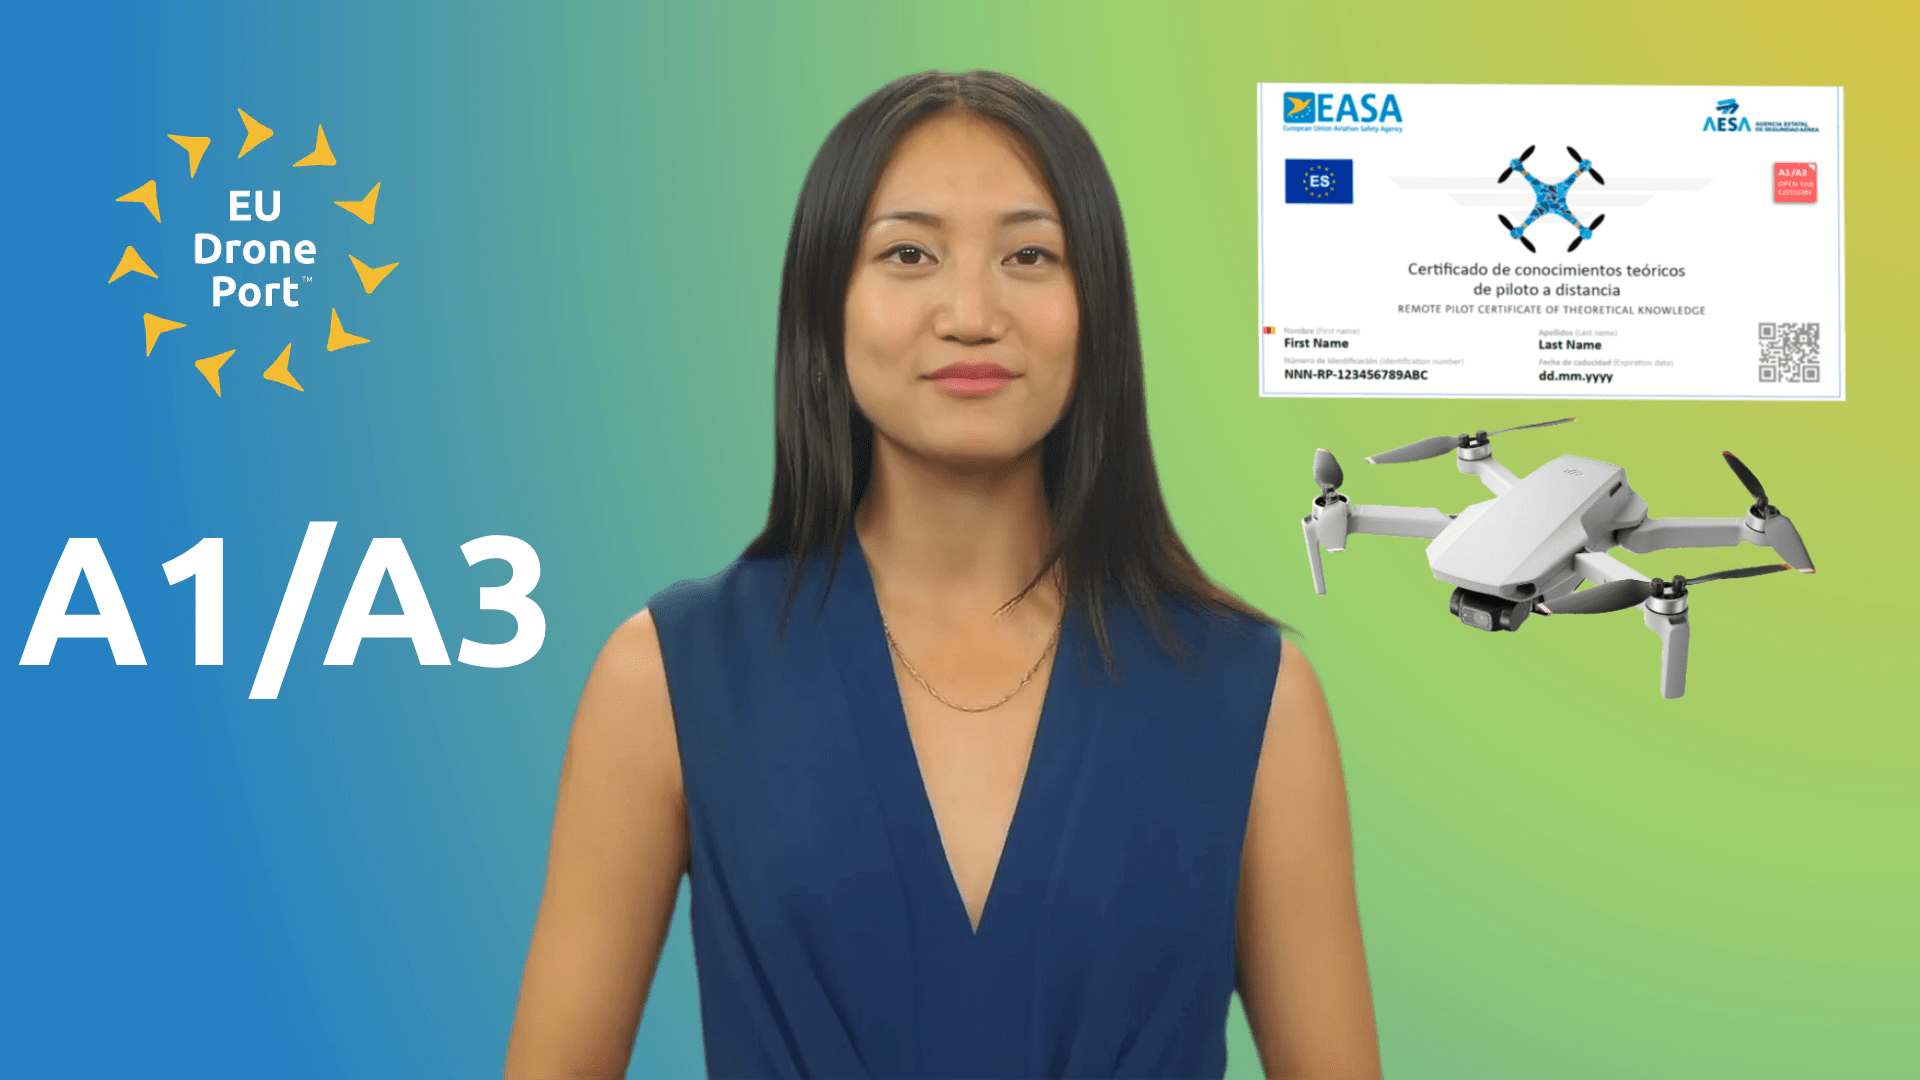 Open A1/A3 – Drone Pilot Training